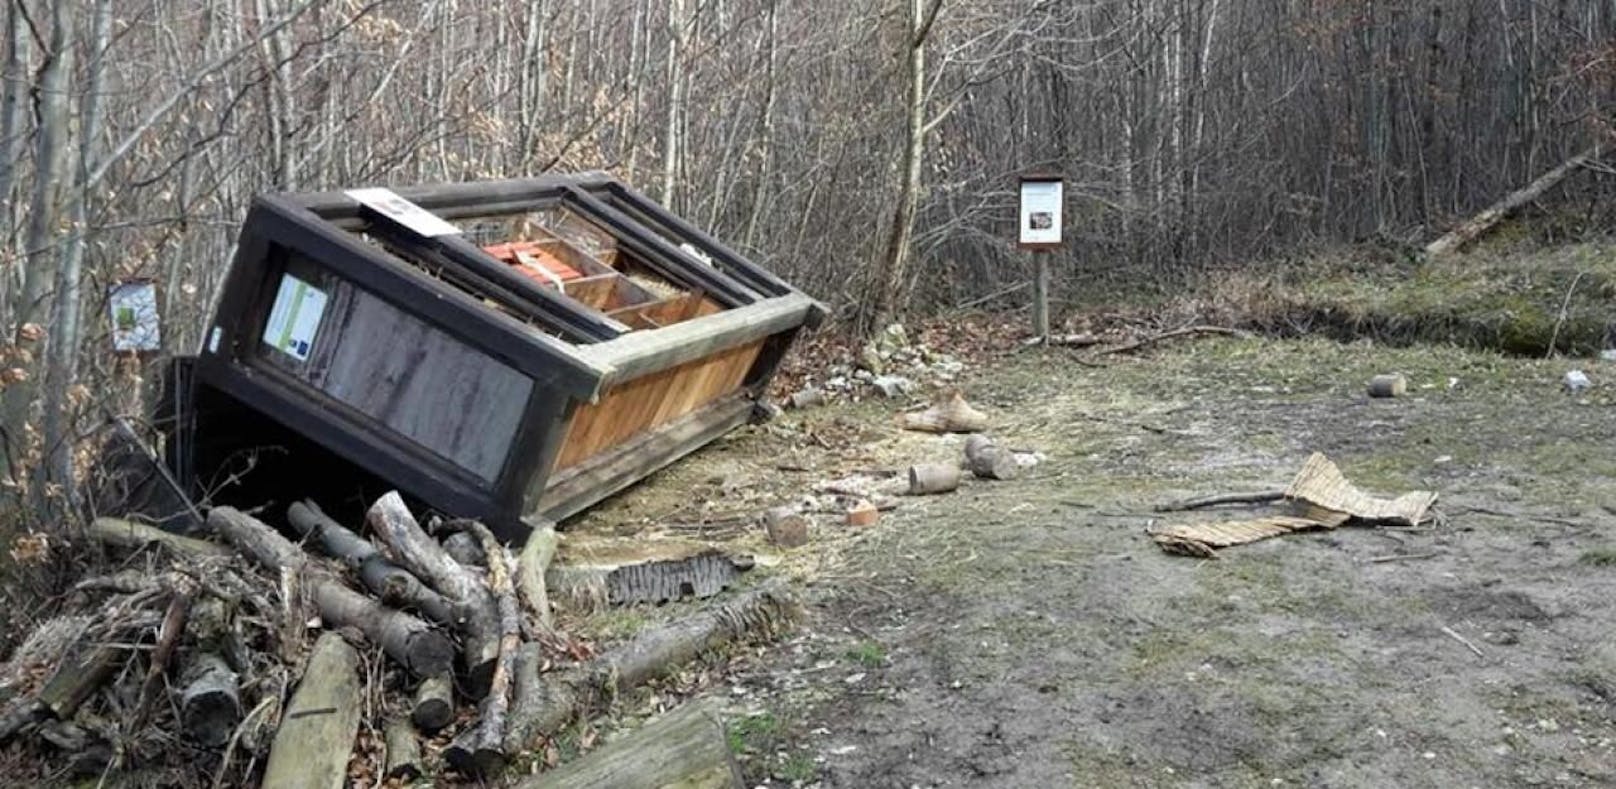 Vandalismus im Naturpark: Gesamtes Nützlingshotel wurde umgeworfen.